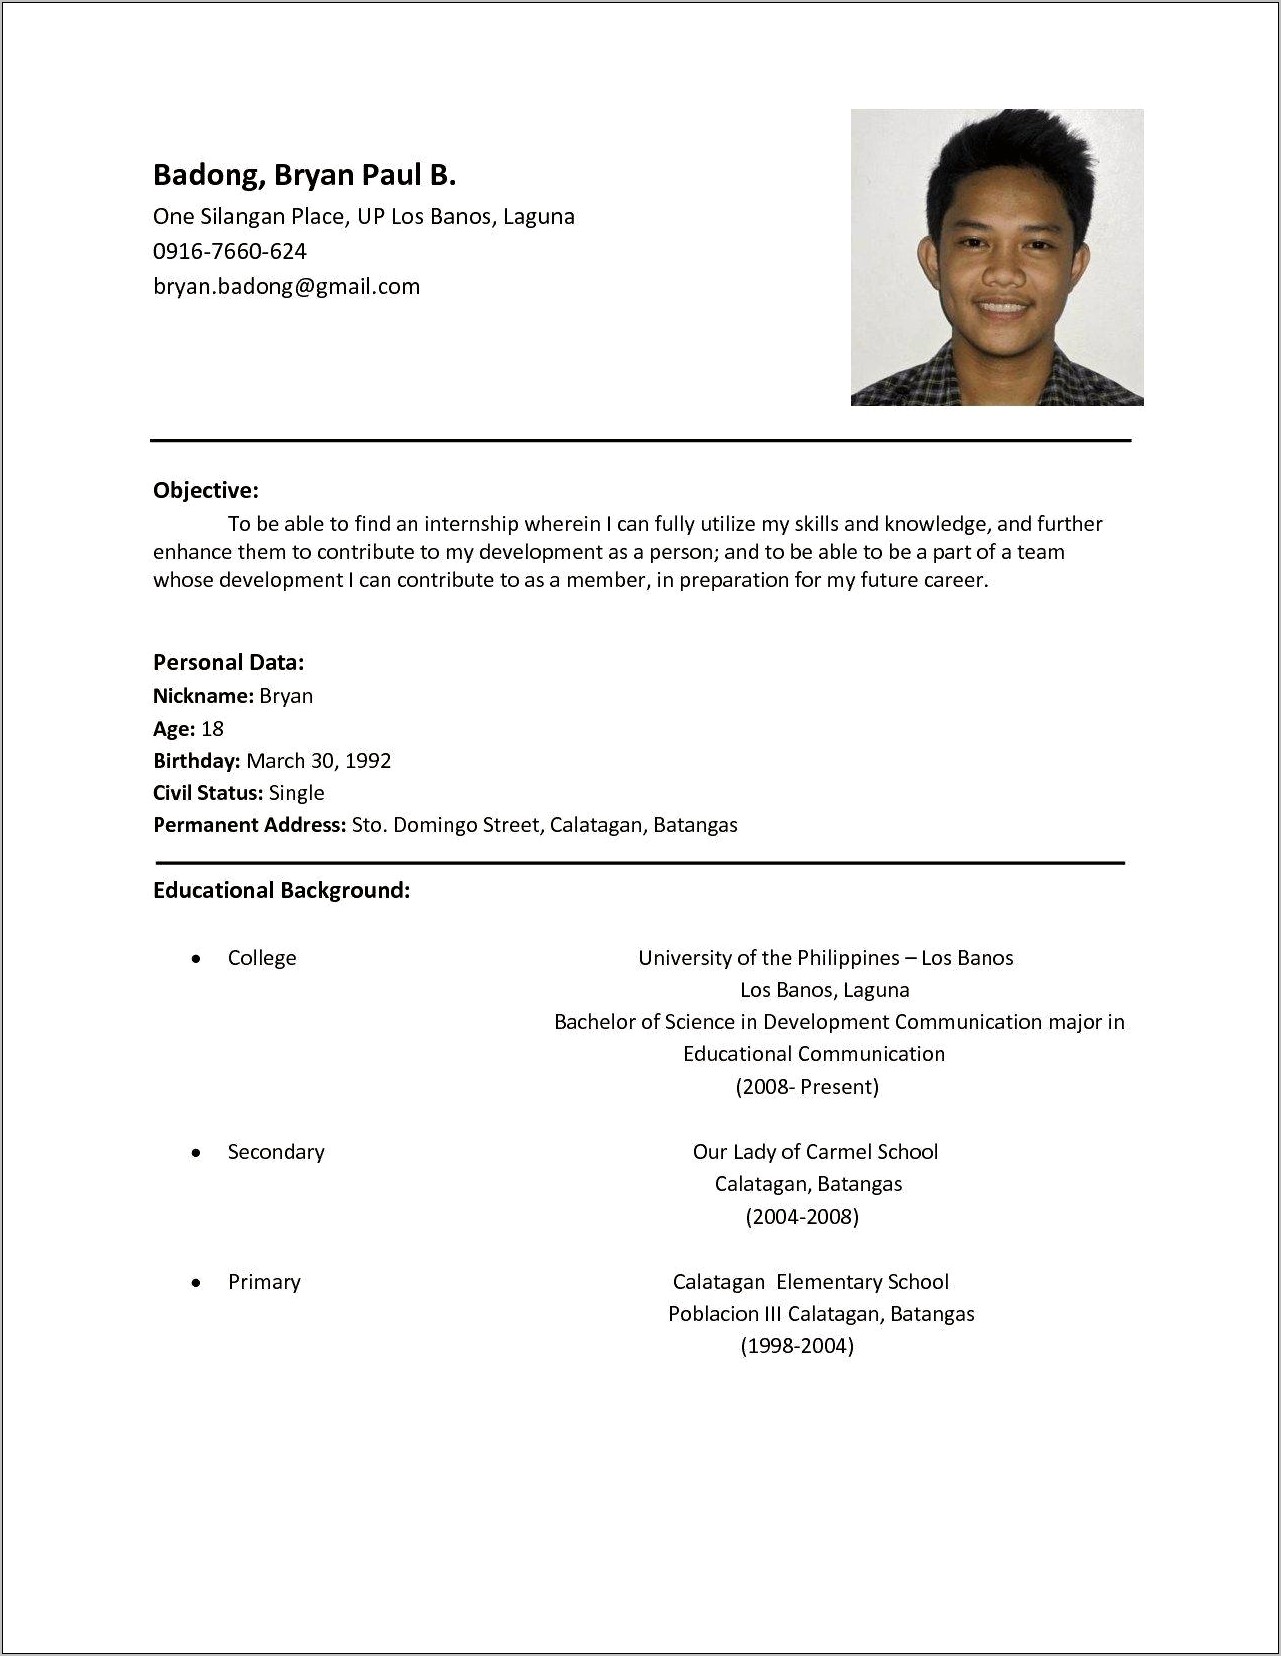 background information in resume